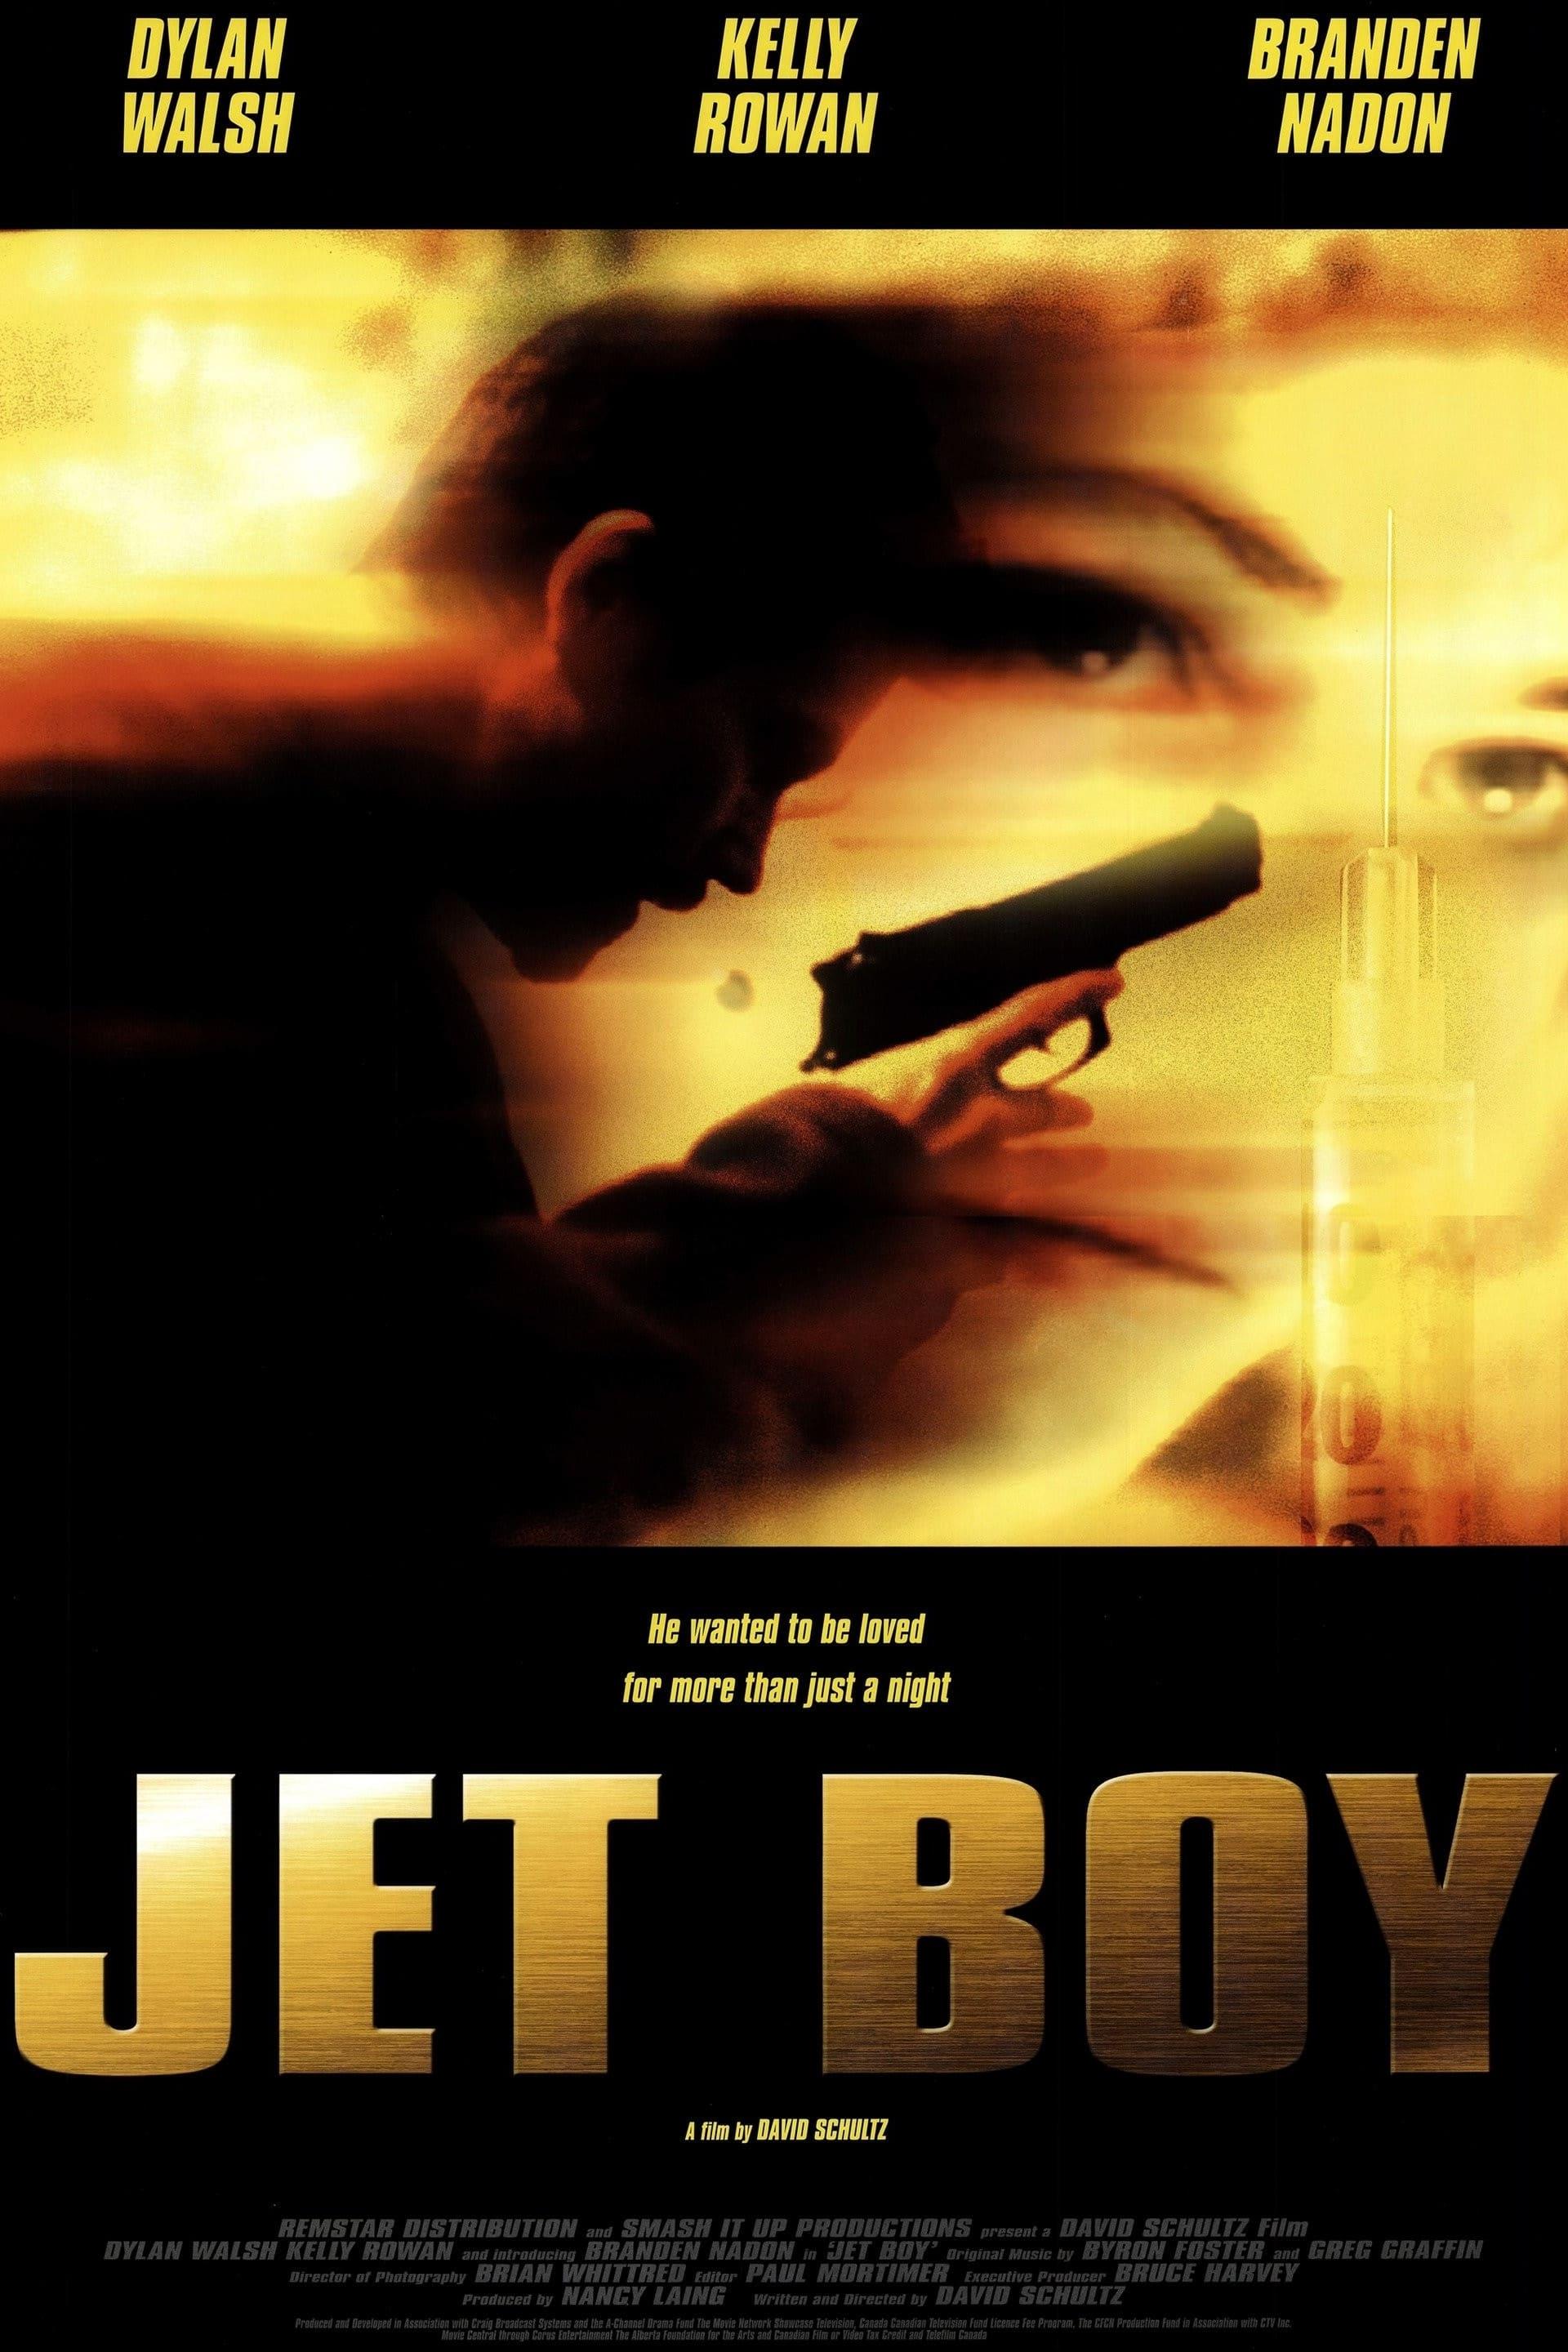 Jet Boy poster